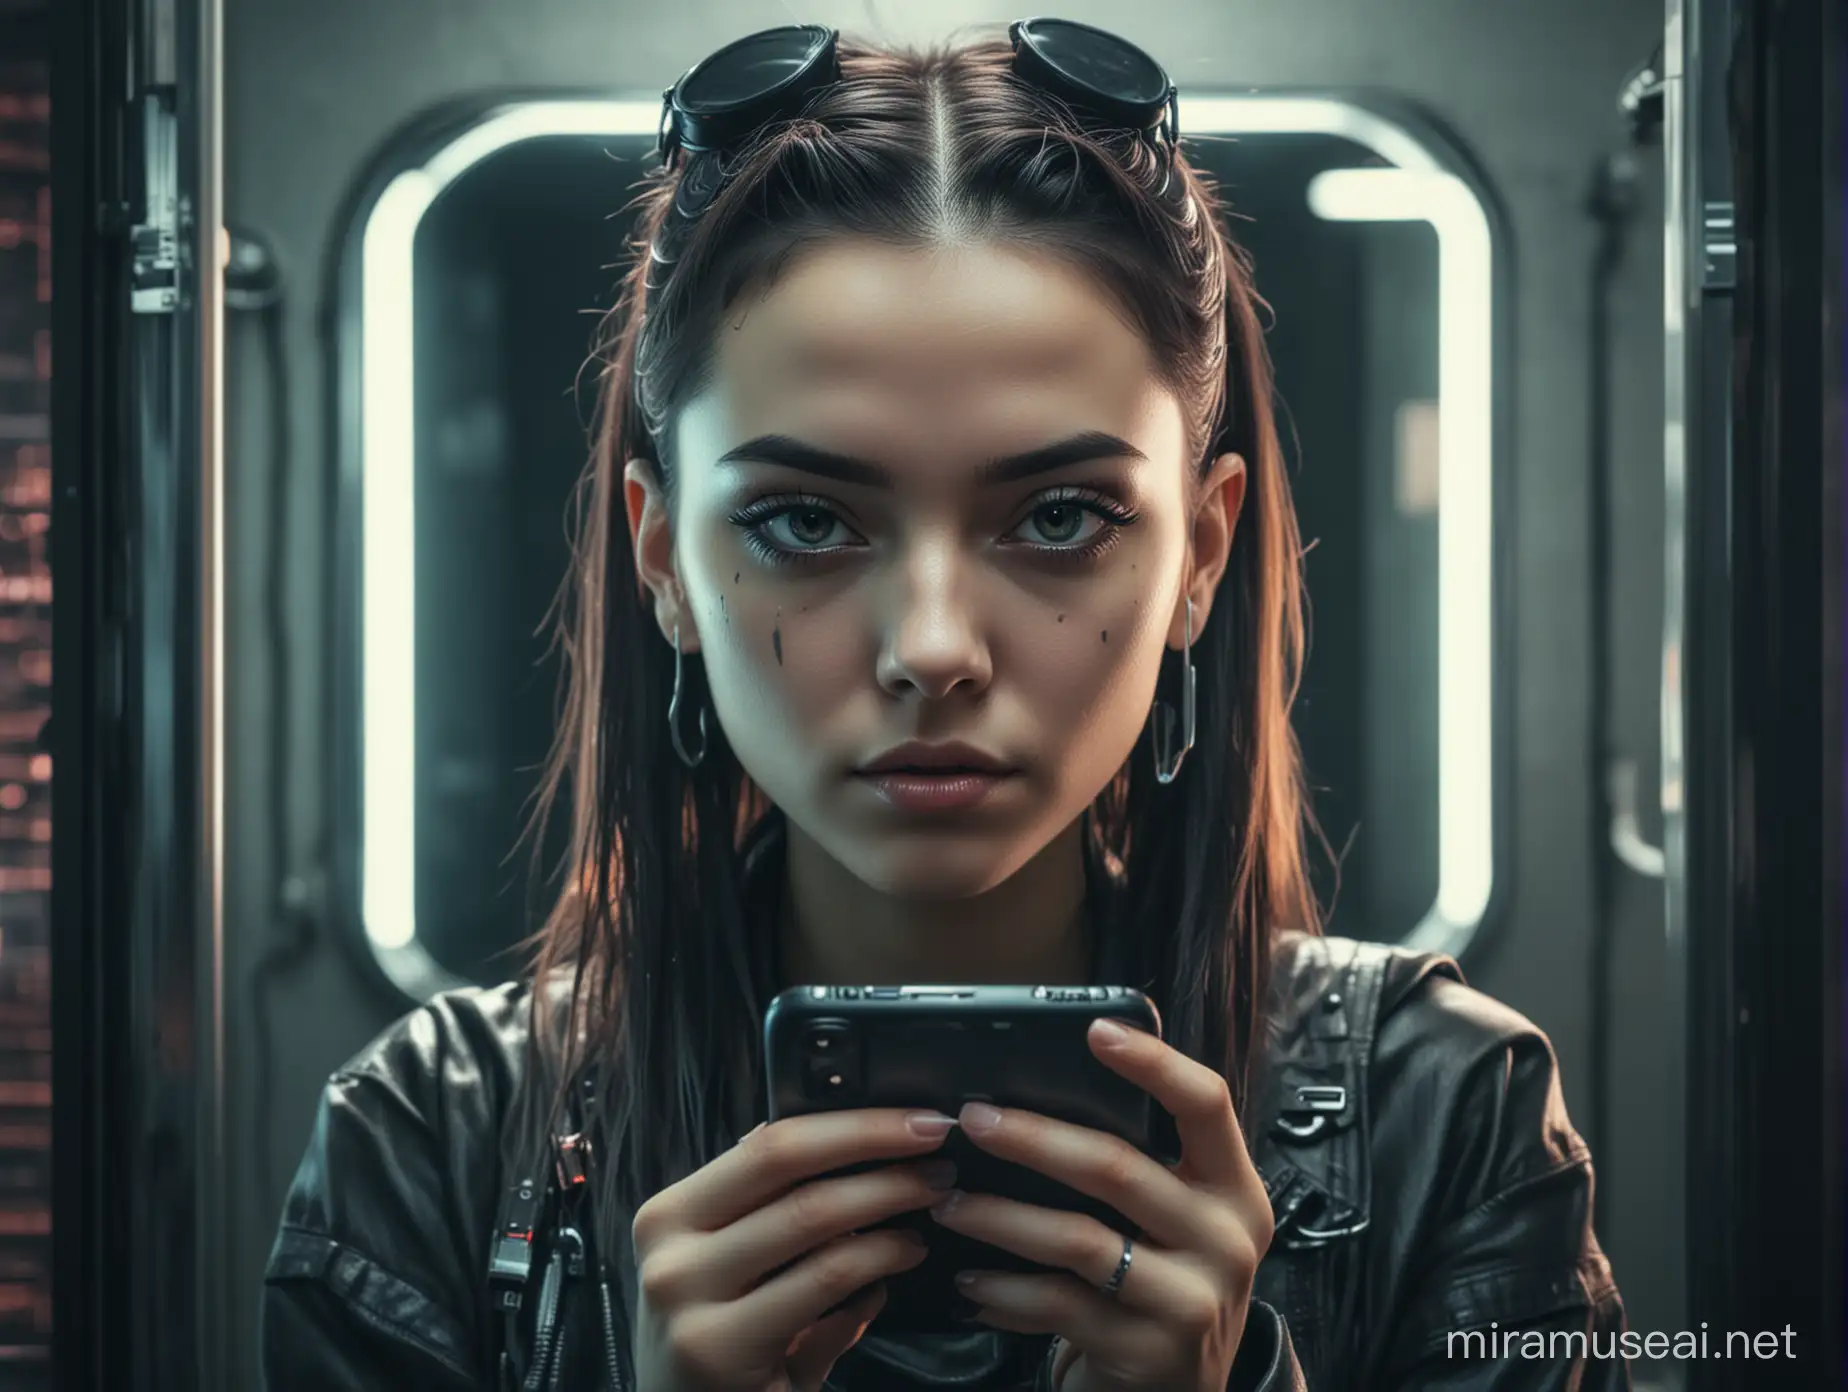 Girr Cyberpunk Portrait Reflecting on Smartphone Social Media